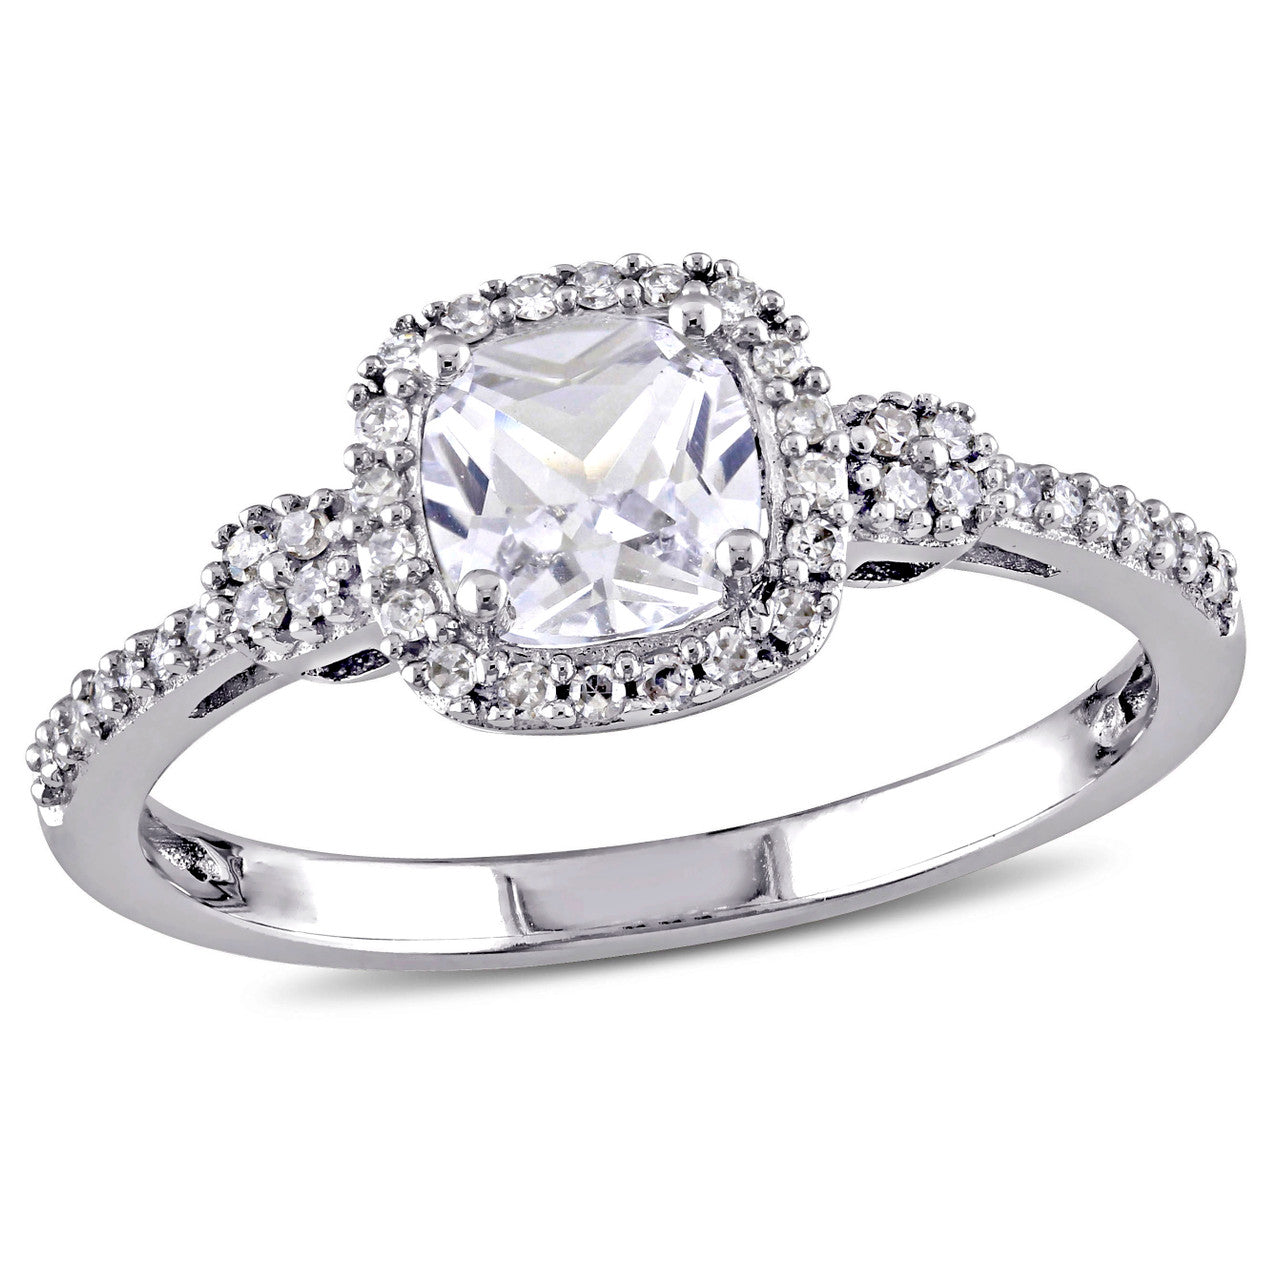 Ice Jewellery 1/6 CT Diamond TW and 3/4 CT TGW Created White Sapphire Ring in 10k White Gold - 75000004656 | Ice Jewellery Australia